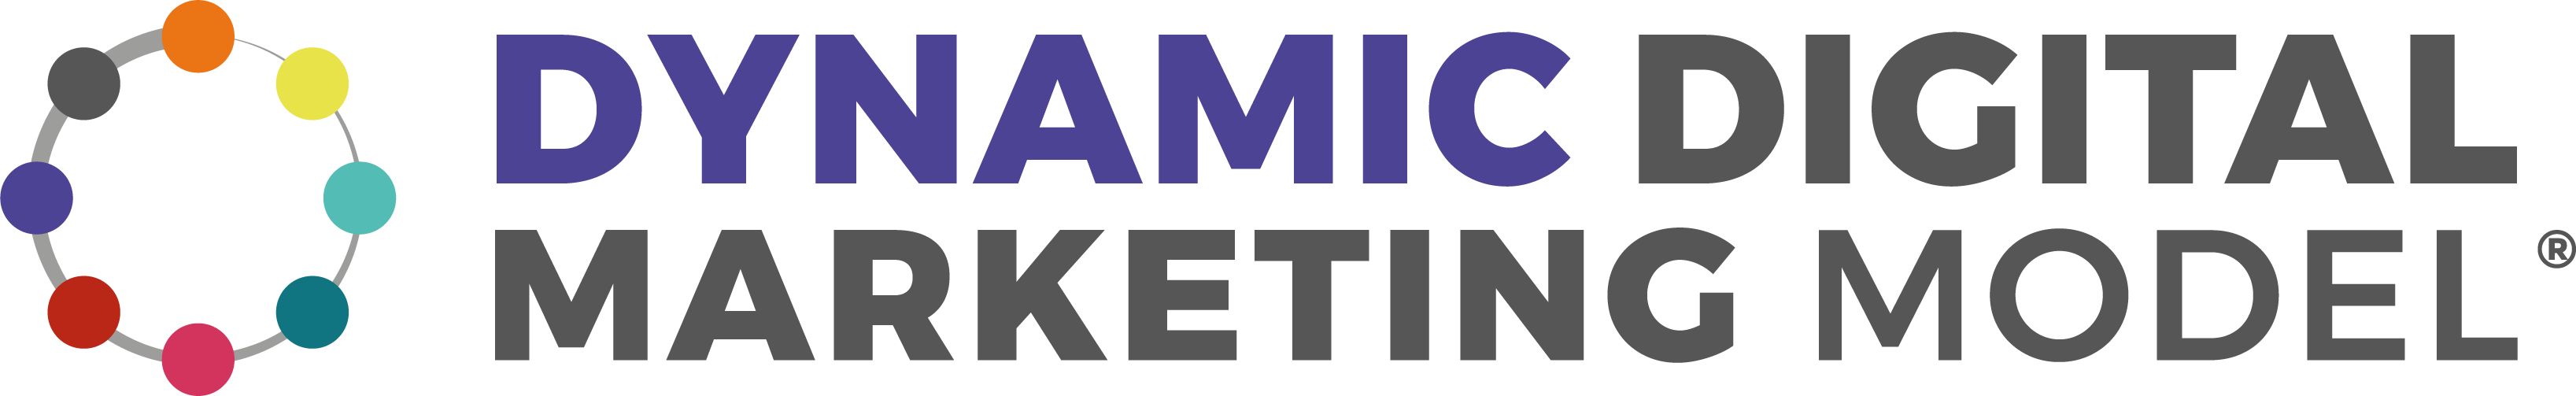 DynamicDigitalMarketingModel_logo-HORIZ